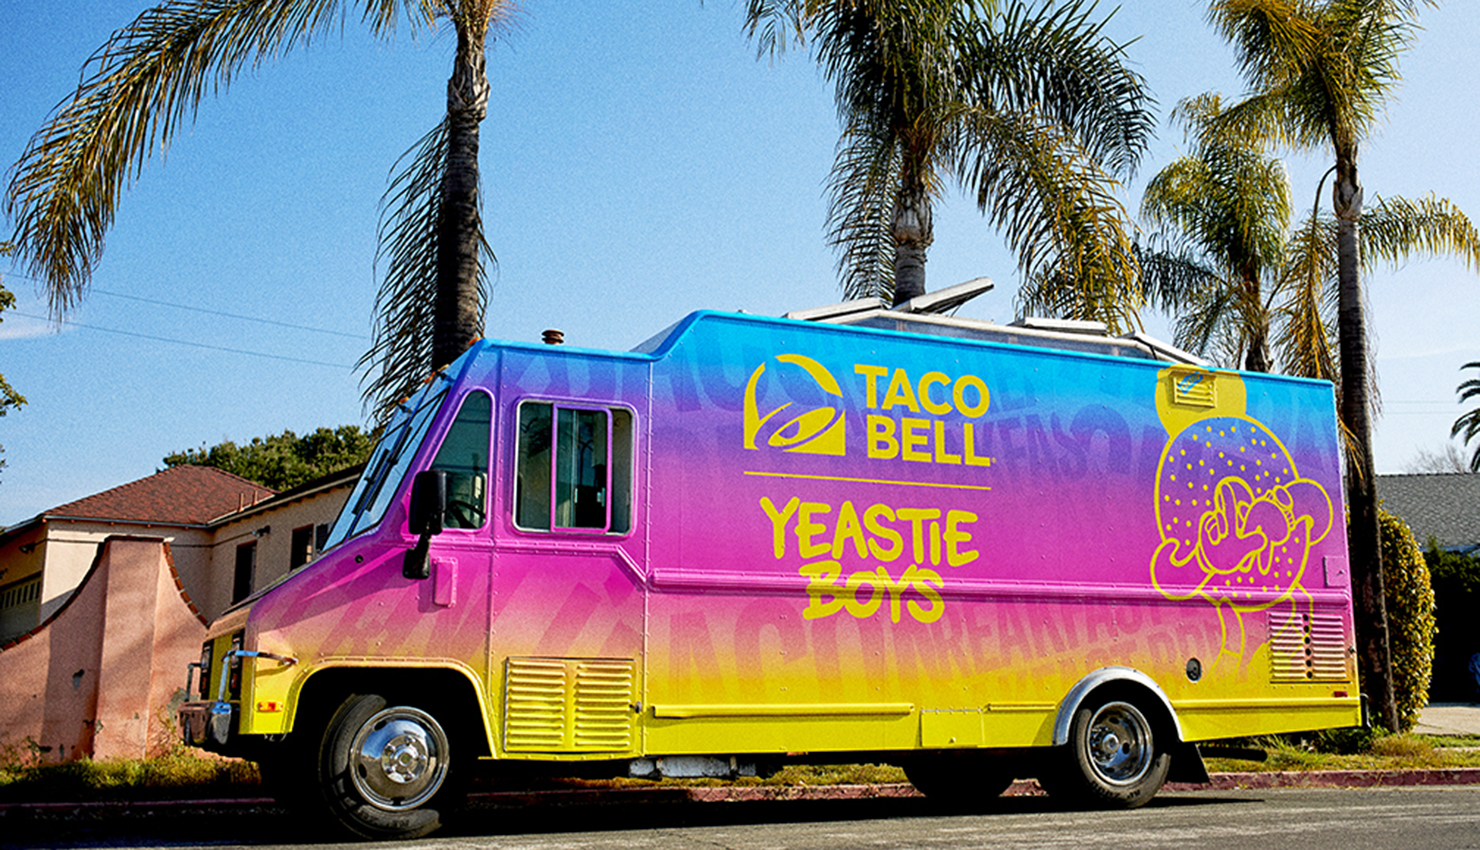 Taco Bell x Yeastie Boys Menu Mashup